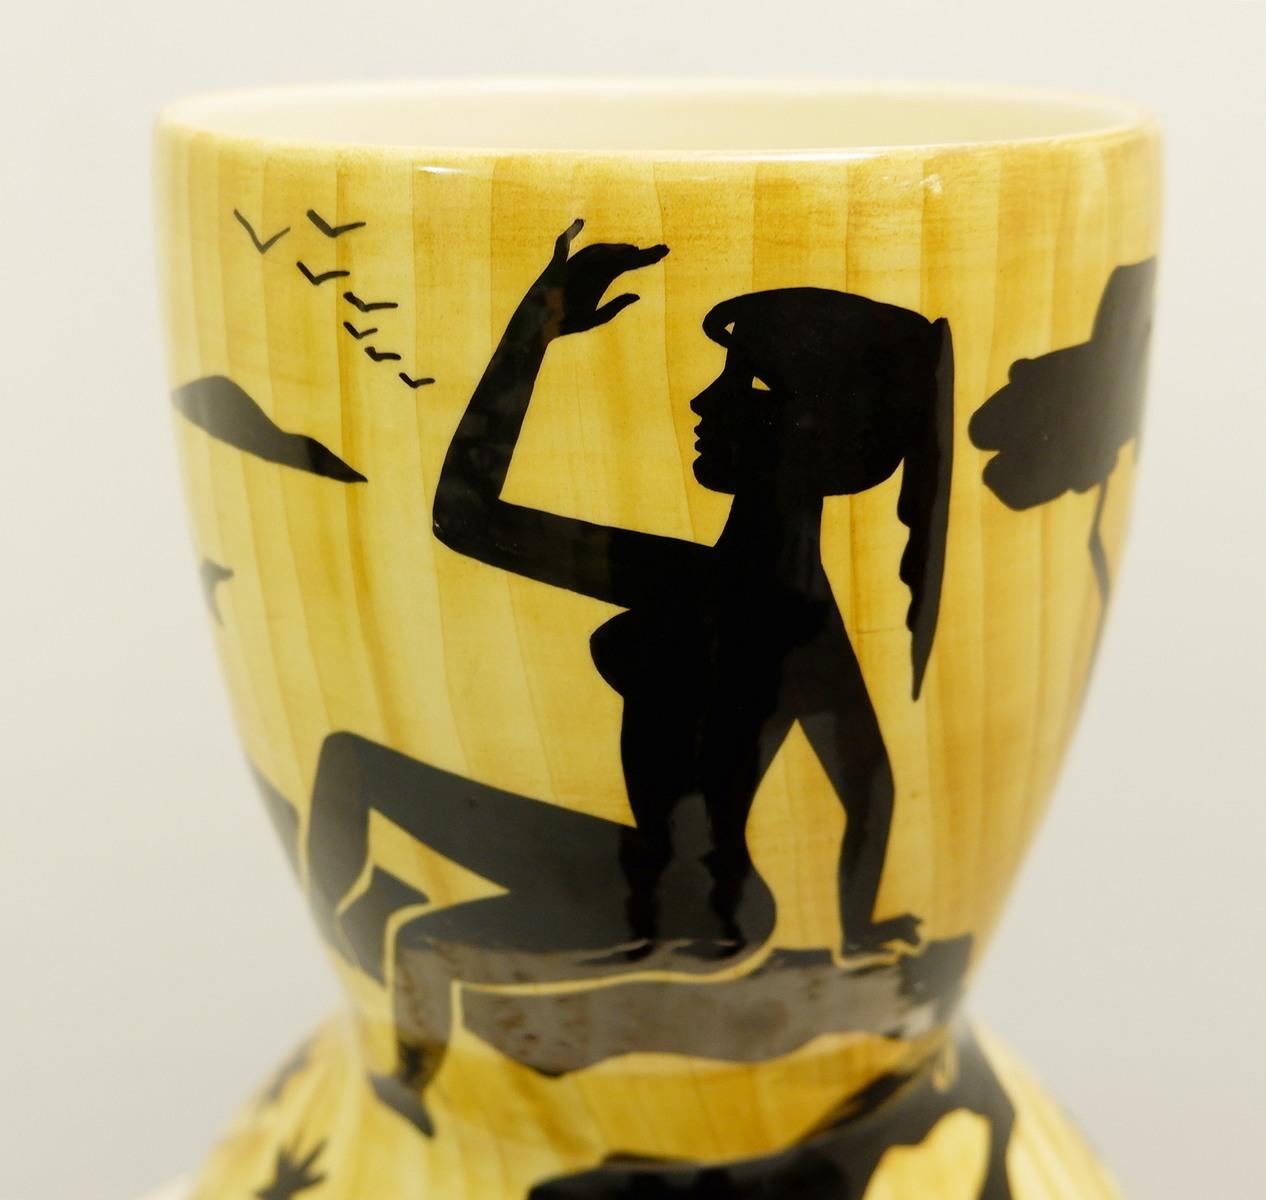 Vallauris ceramic vase by Granjean Jourdan, 1960s.